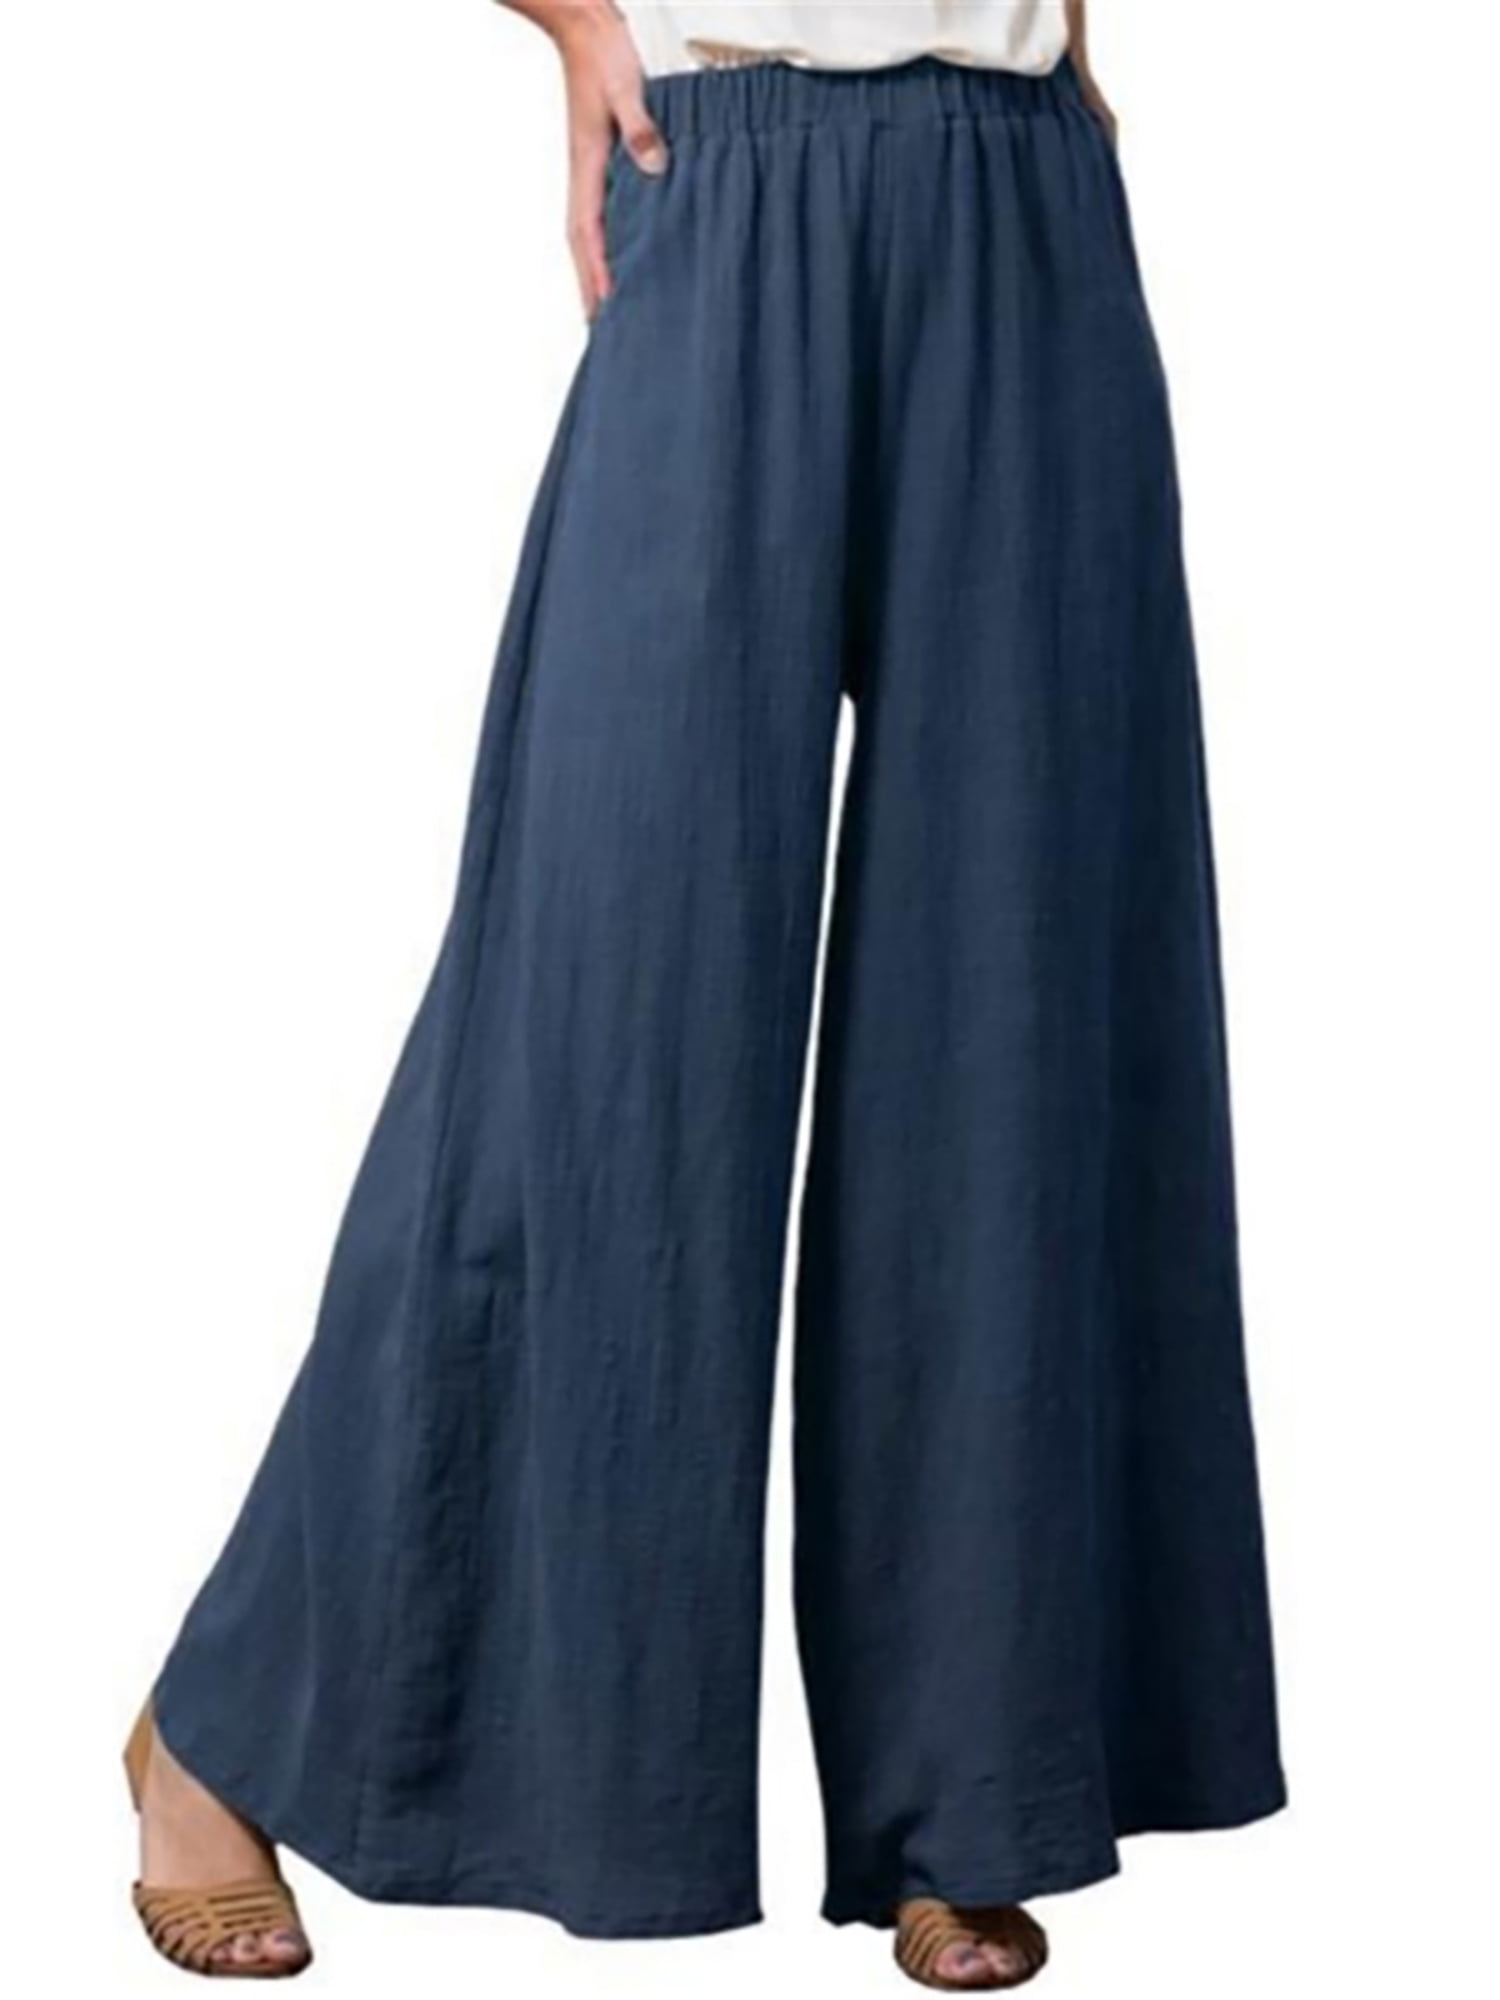 UKAP Casual Linen Cotton Baggy Pants for Women with Elastic Waist Relax ...